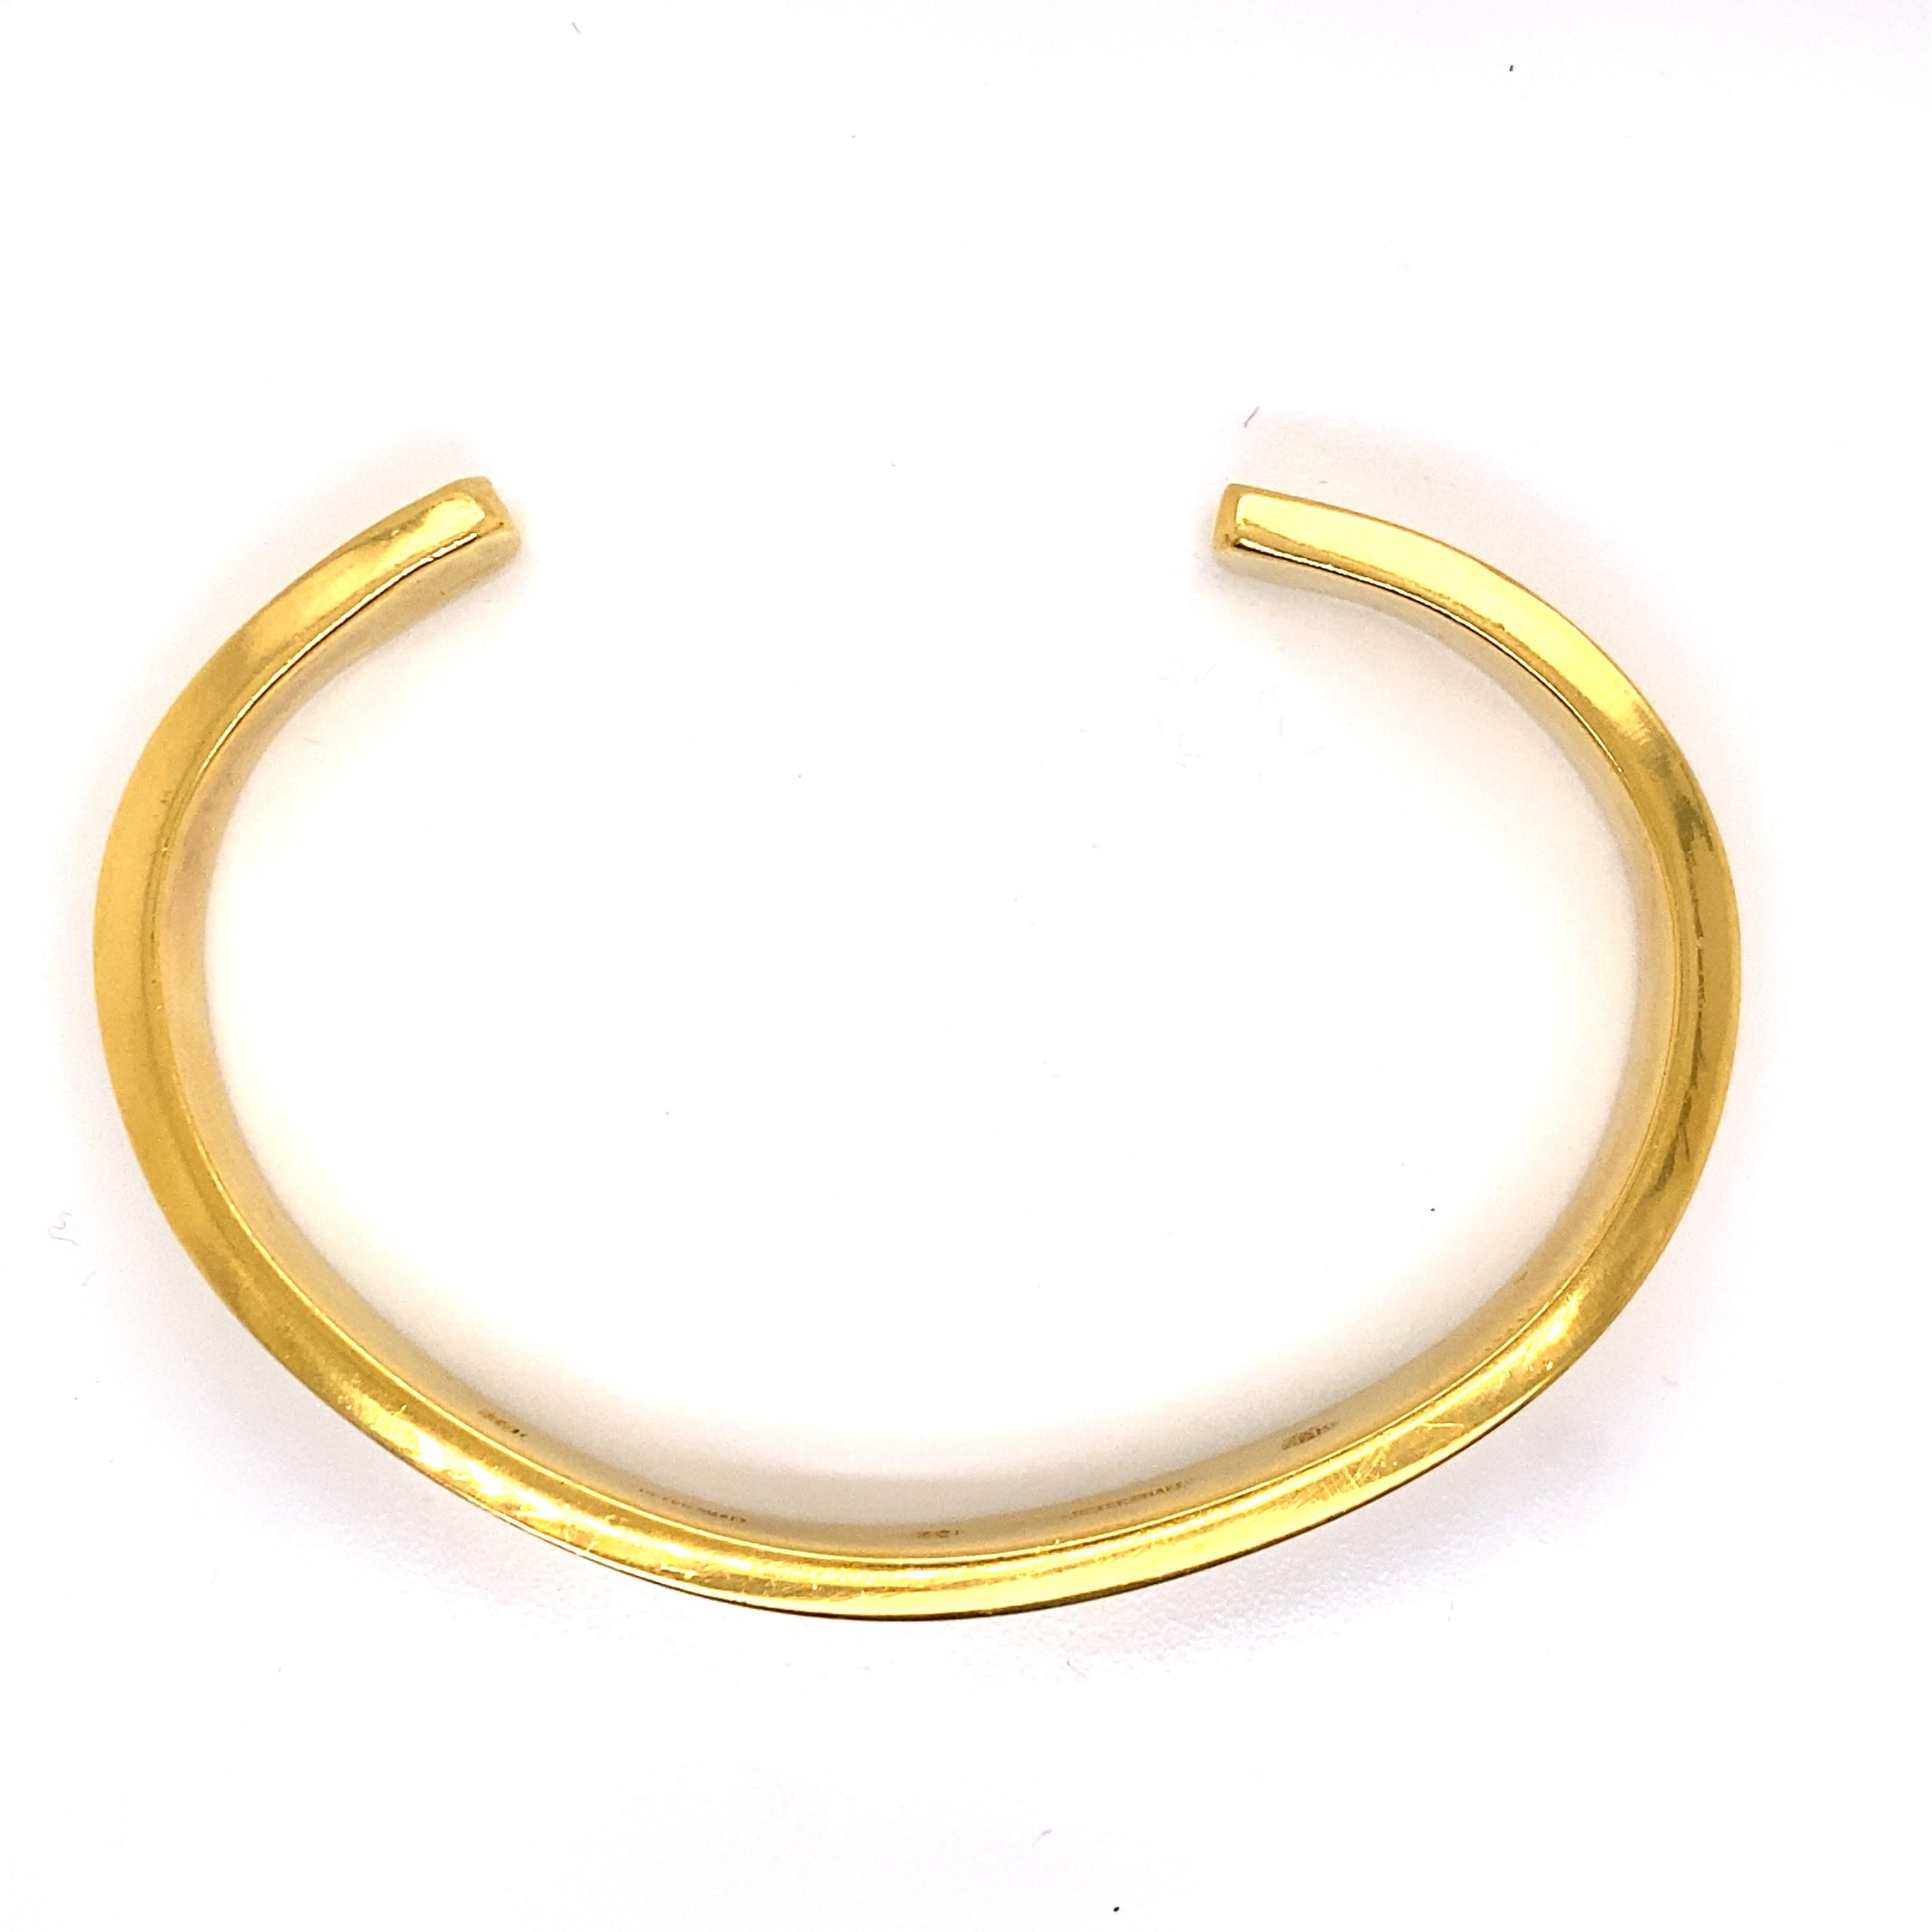 22k gold cuff bracelet